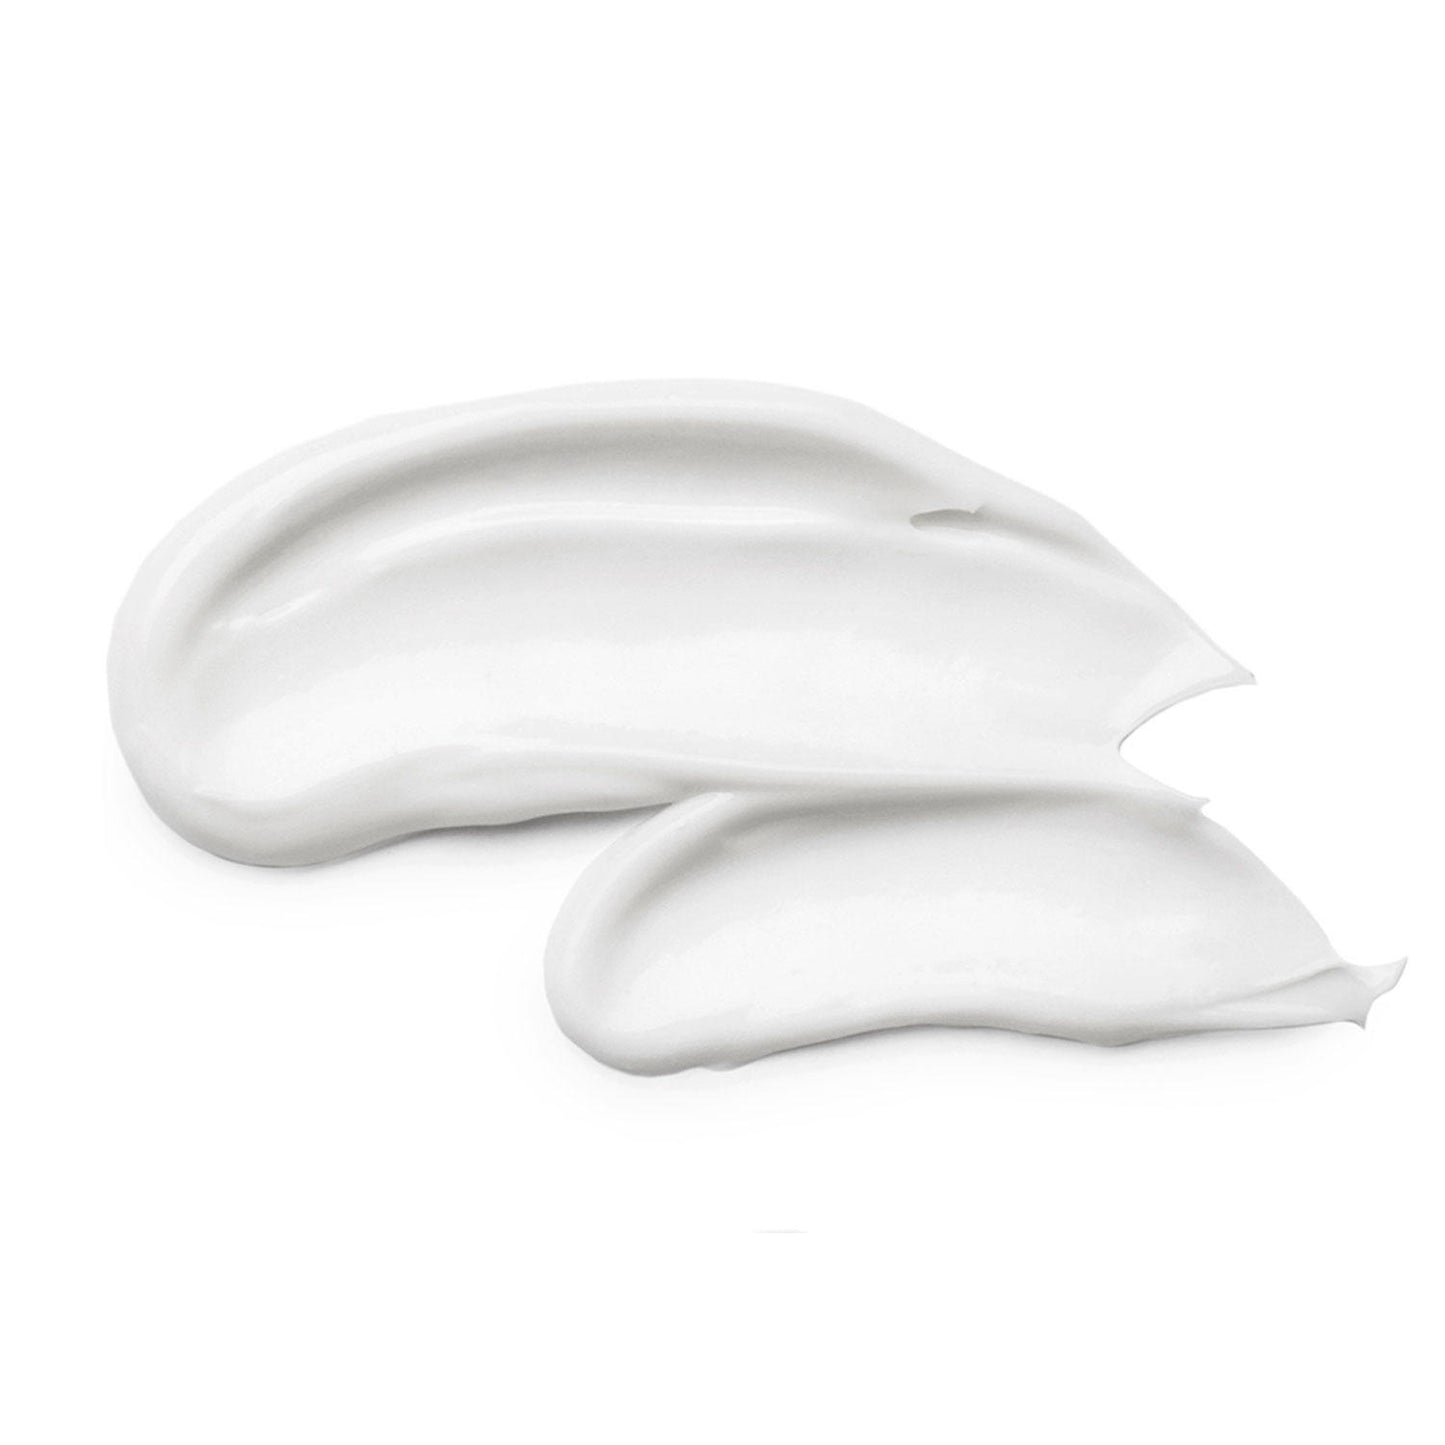 NatureWell Coconut + MCT Moisturizing Cream (16 oz.)